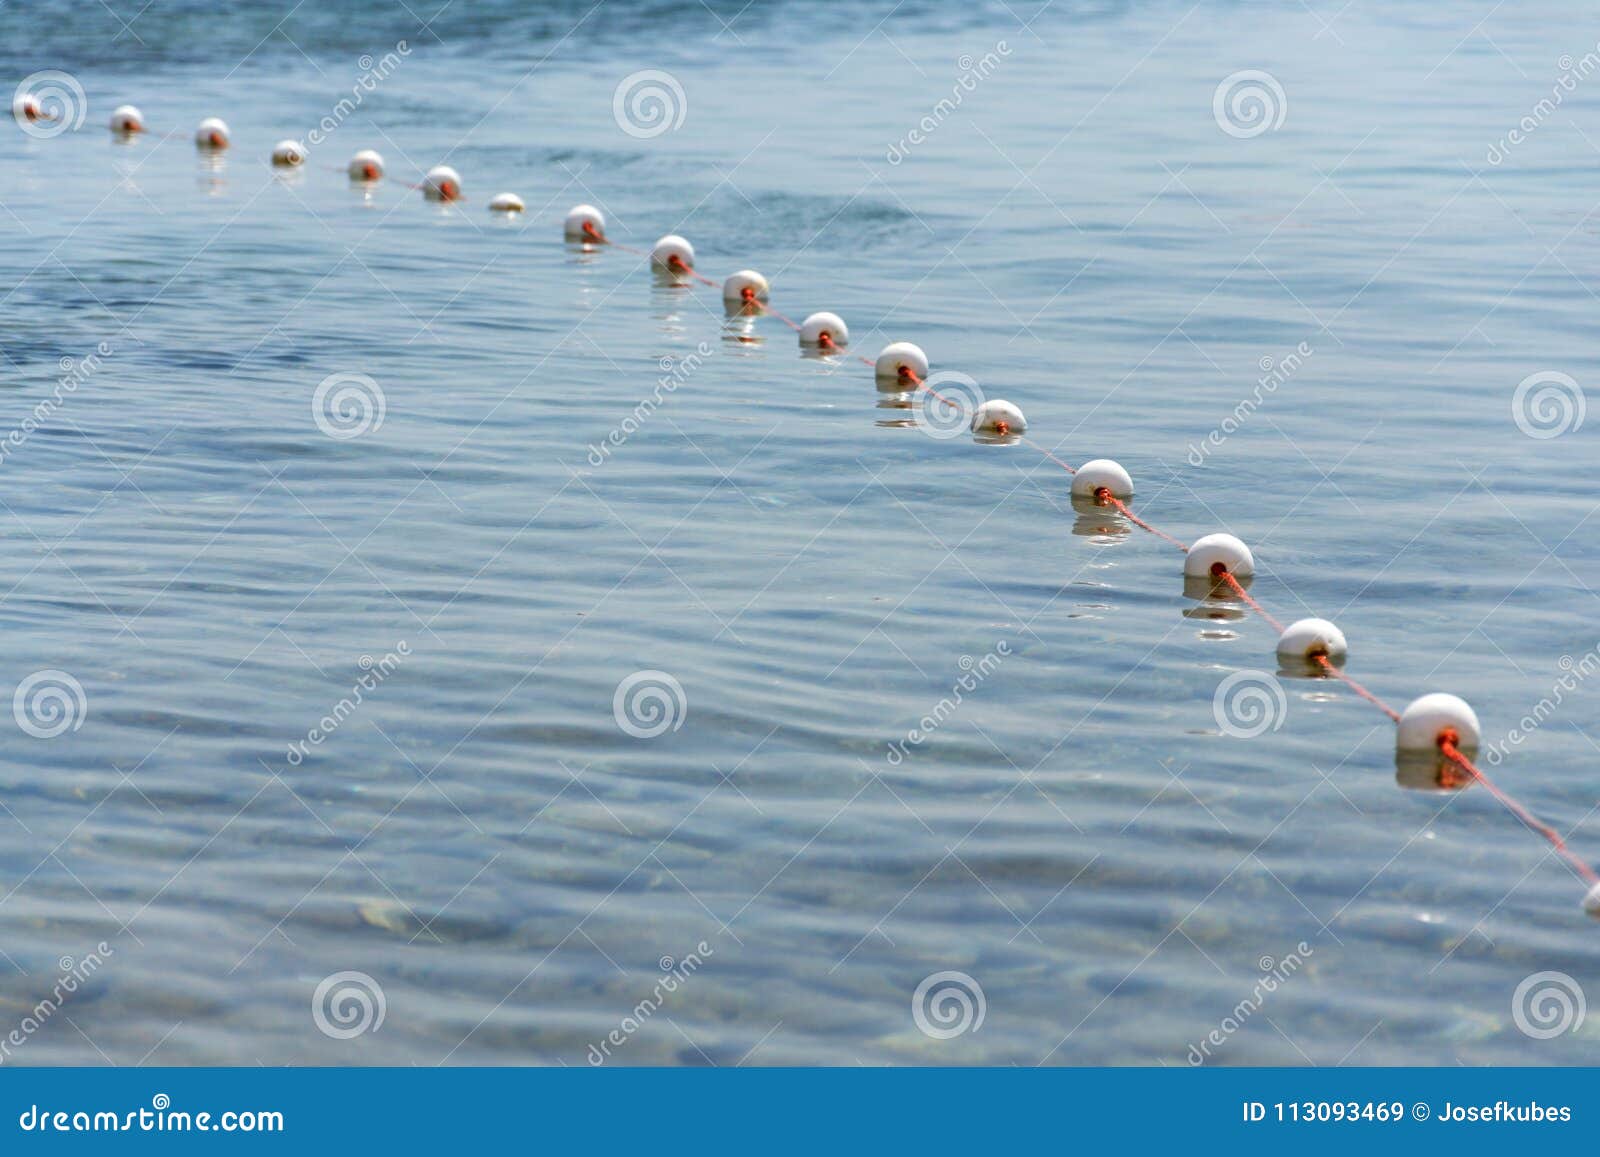 Buoys on Fish Net Floating on Surface of Water Stock Image - Image